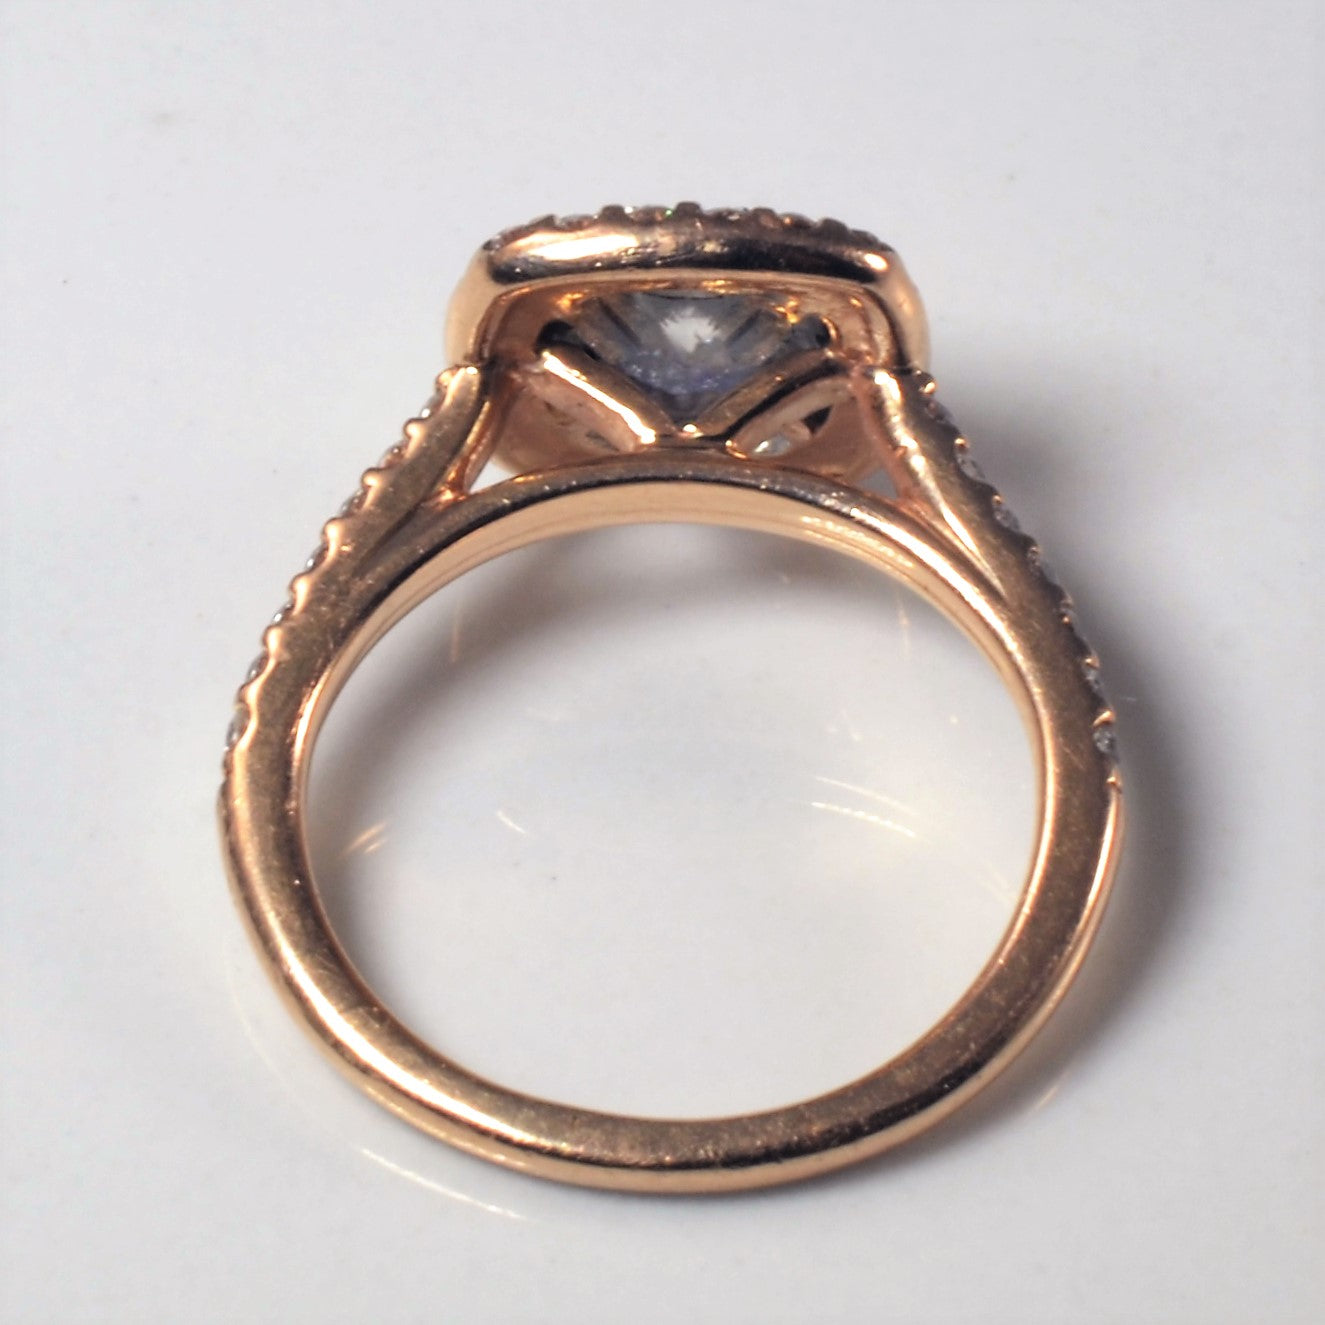 Double Halo Diamond Engagement Ring | 0.66ctw | SZ 4.5 |